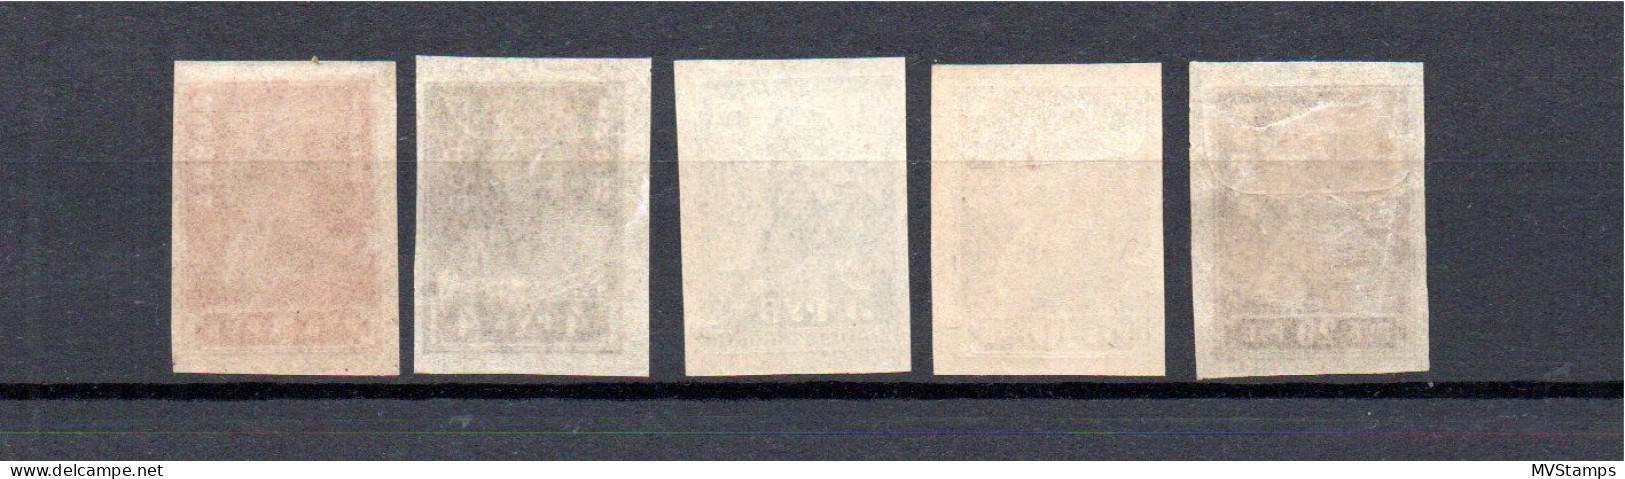 Russia 1923 Set Imperved Definitive Stamps (Michel 215/19 B) MLH - Oblitérés